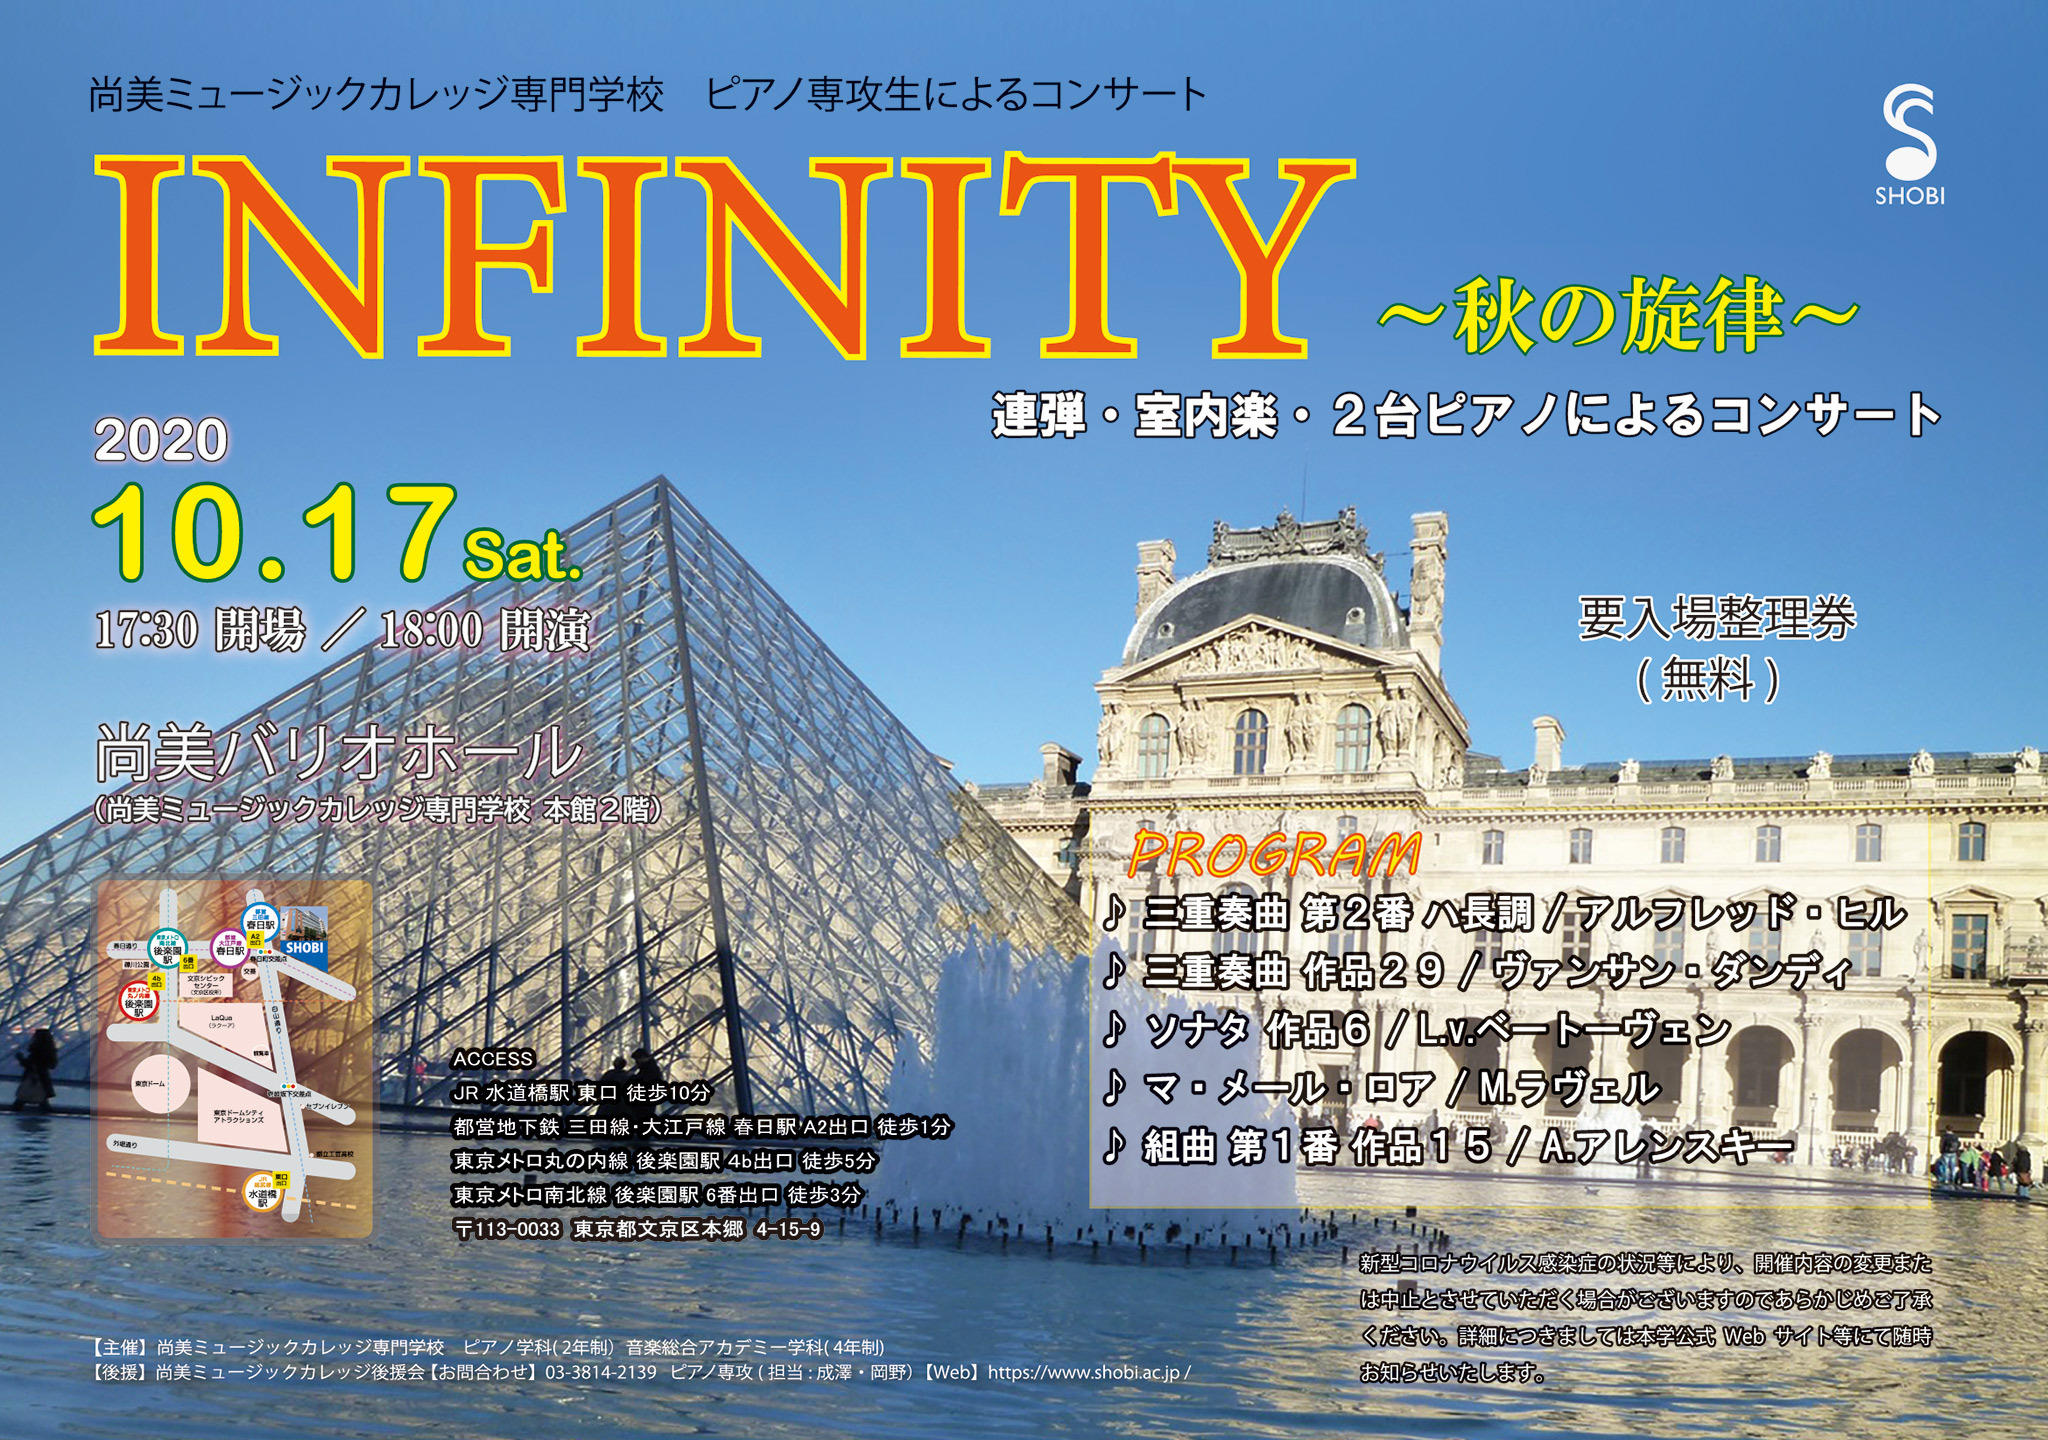 https://www.shobi.ac.jp/event/20201017_pf_infinity.jpg